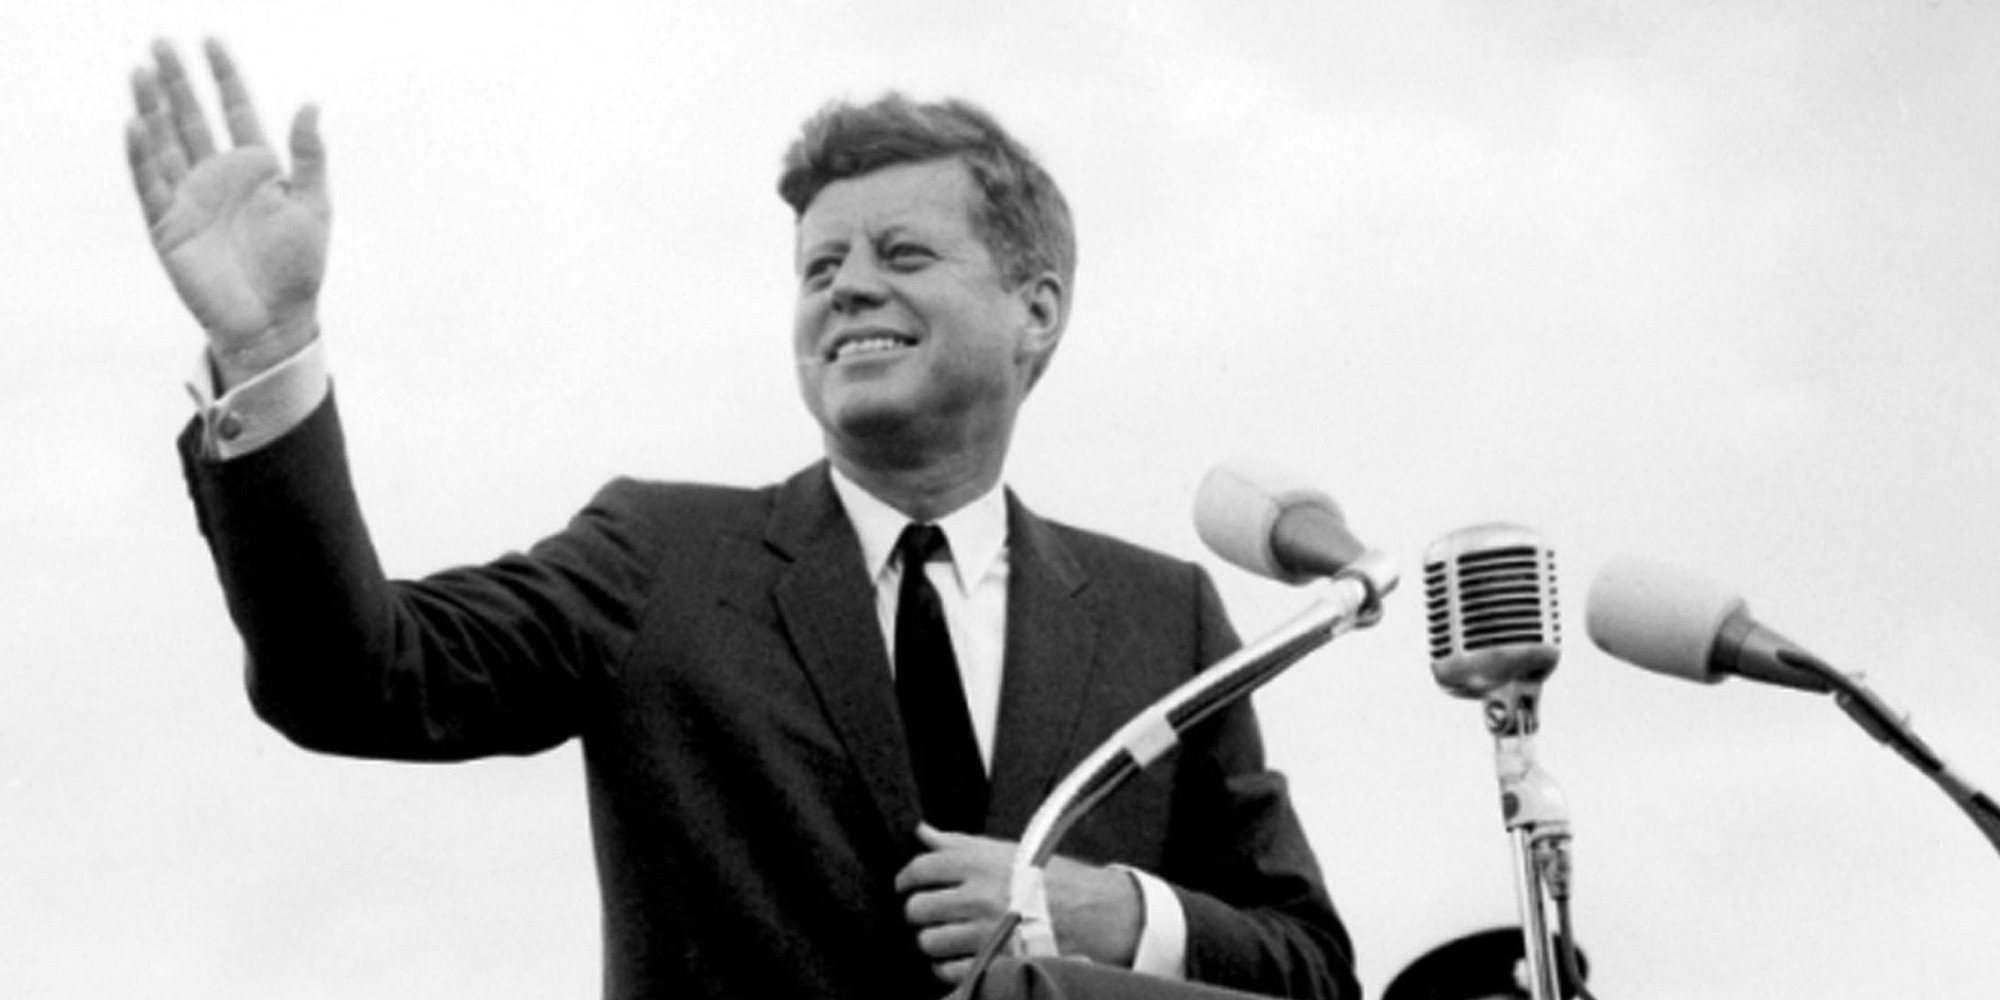 JFK assassination 50th anniversary